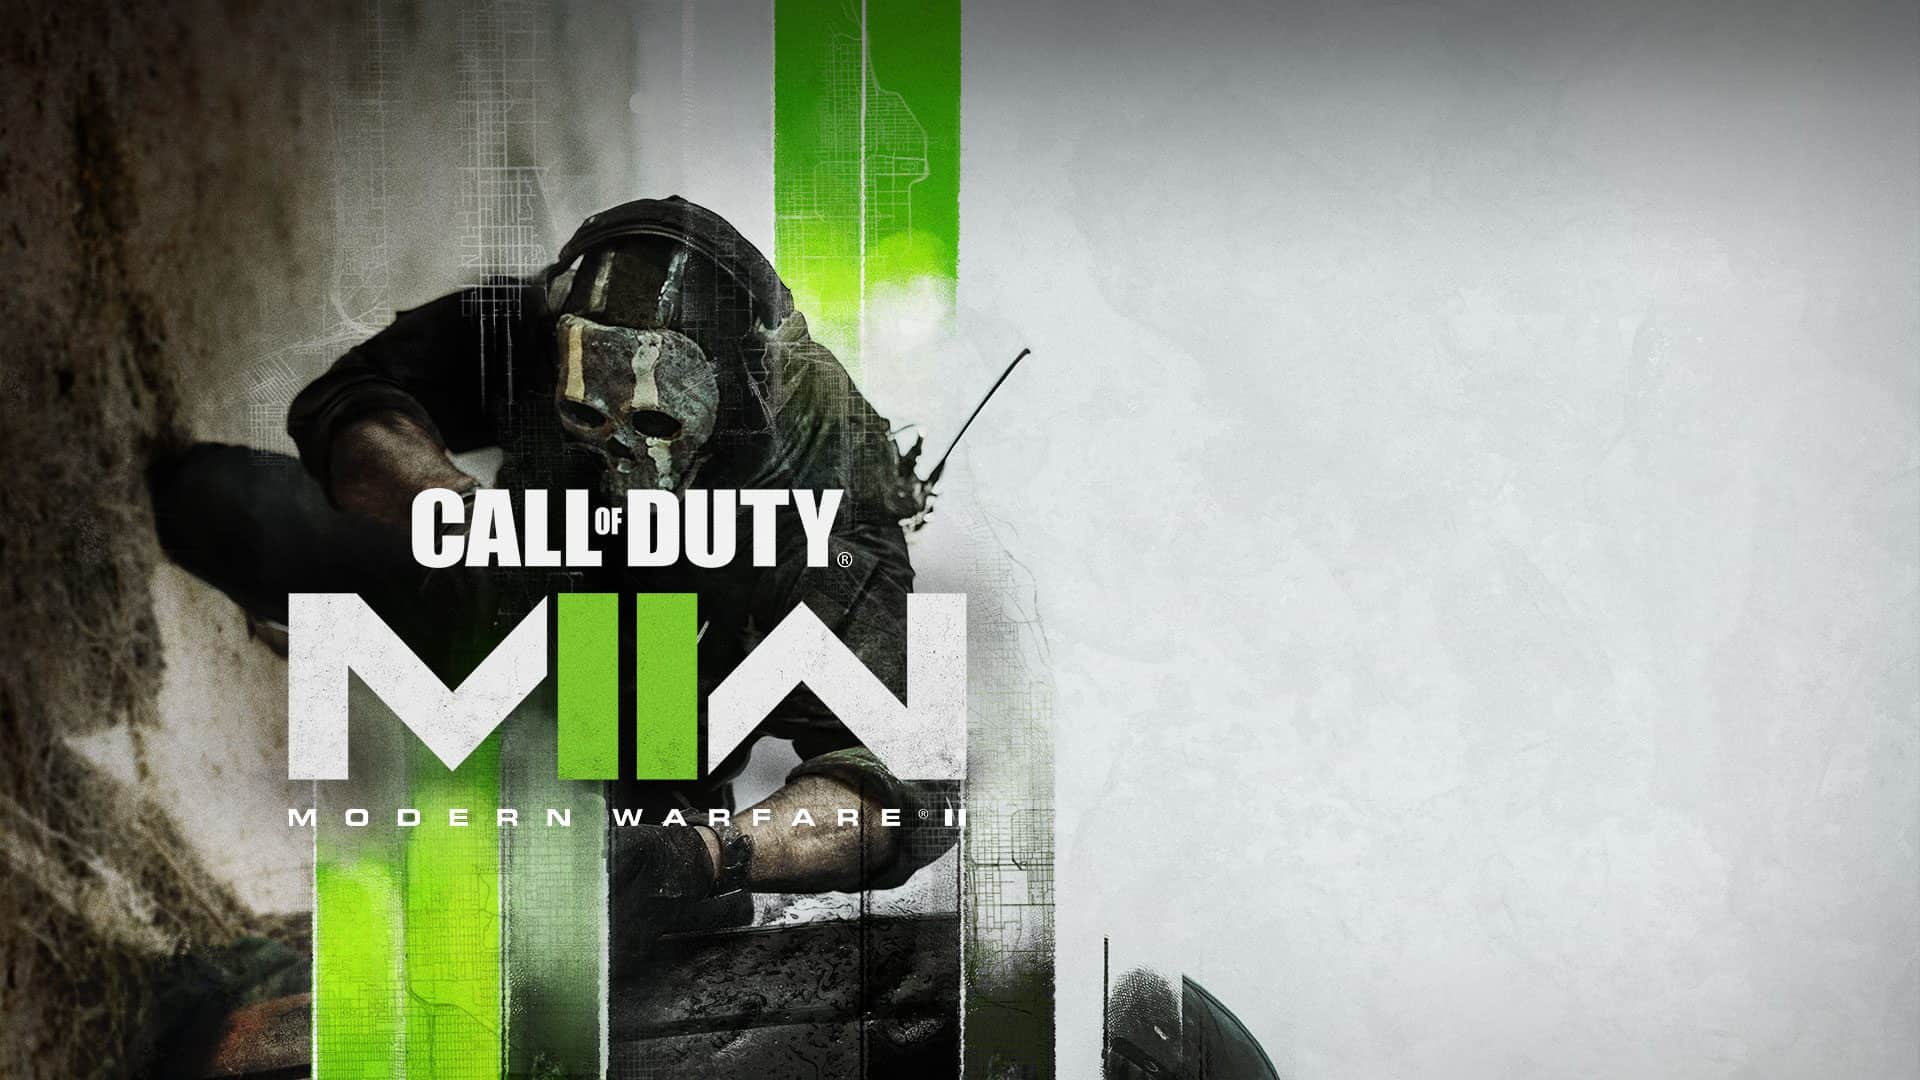 Call of Duty: Modern Warfare II game poster